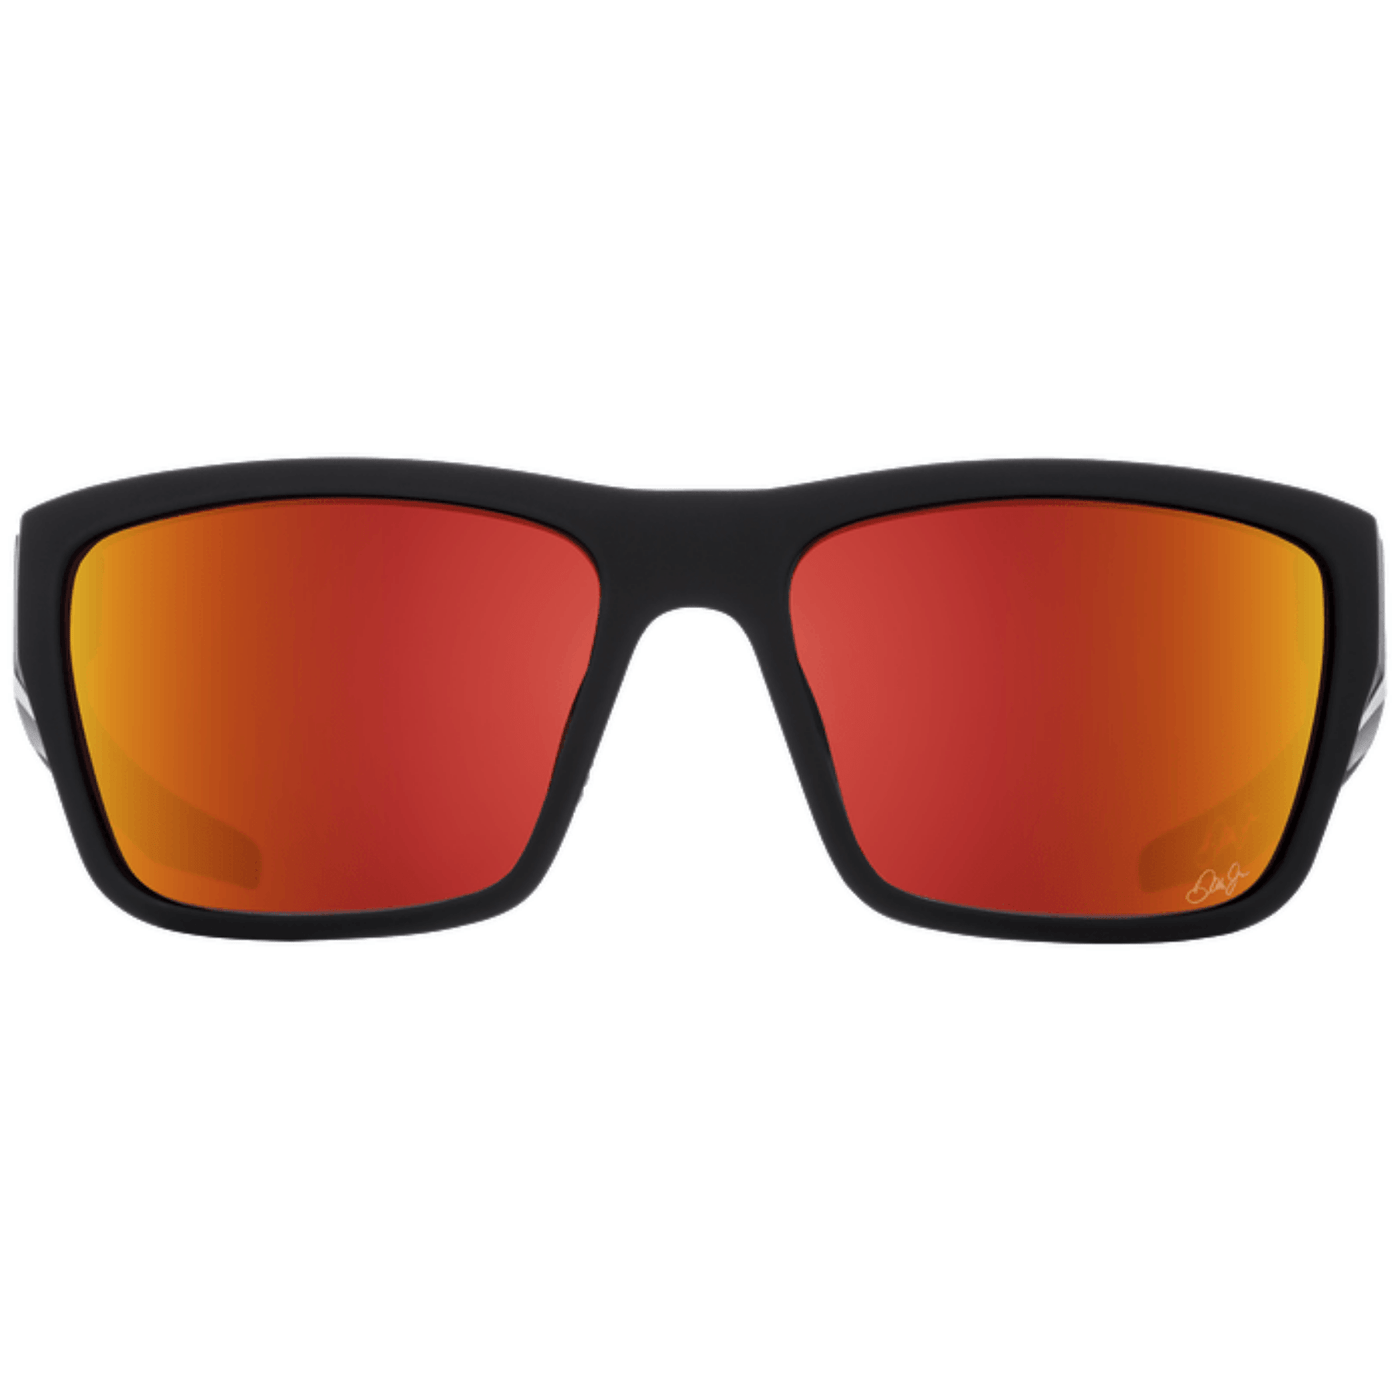 SPY DIRTY MO 2 Sunglasses, Happy Lens - Orange 8Lines Shop - Fast Shipping